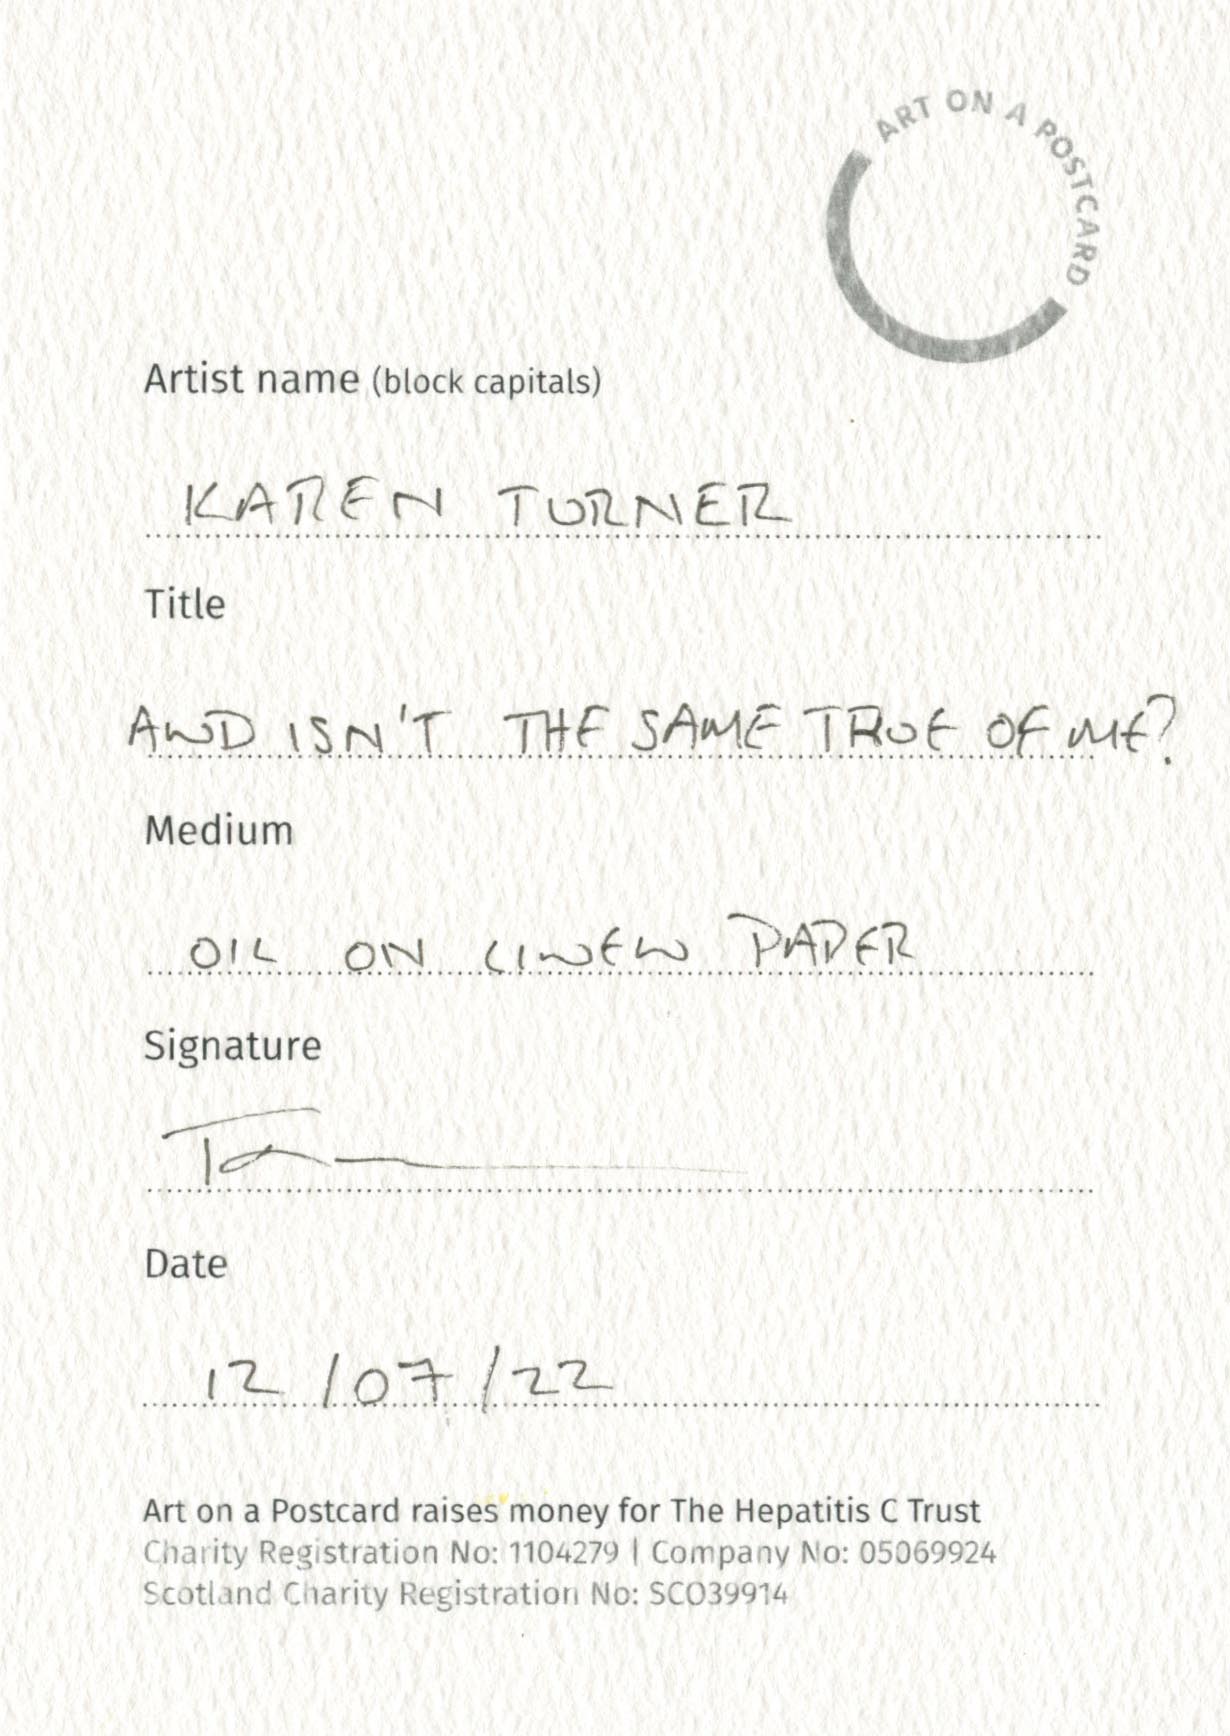 37. Karen Turner - And Isn't The Same True of Me? - BACK